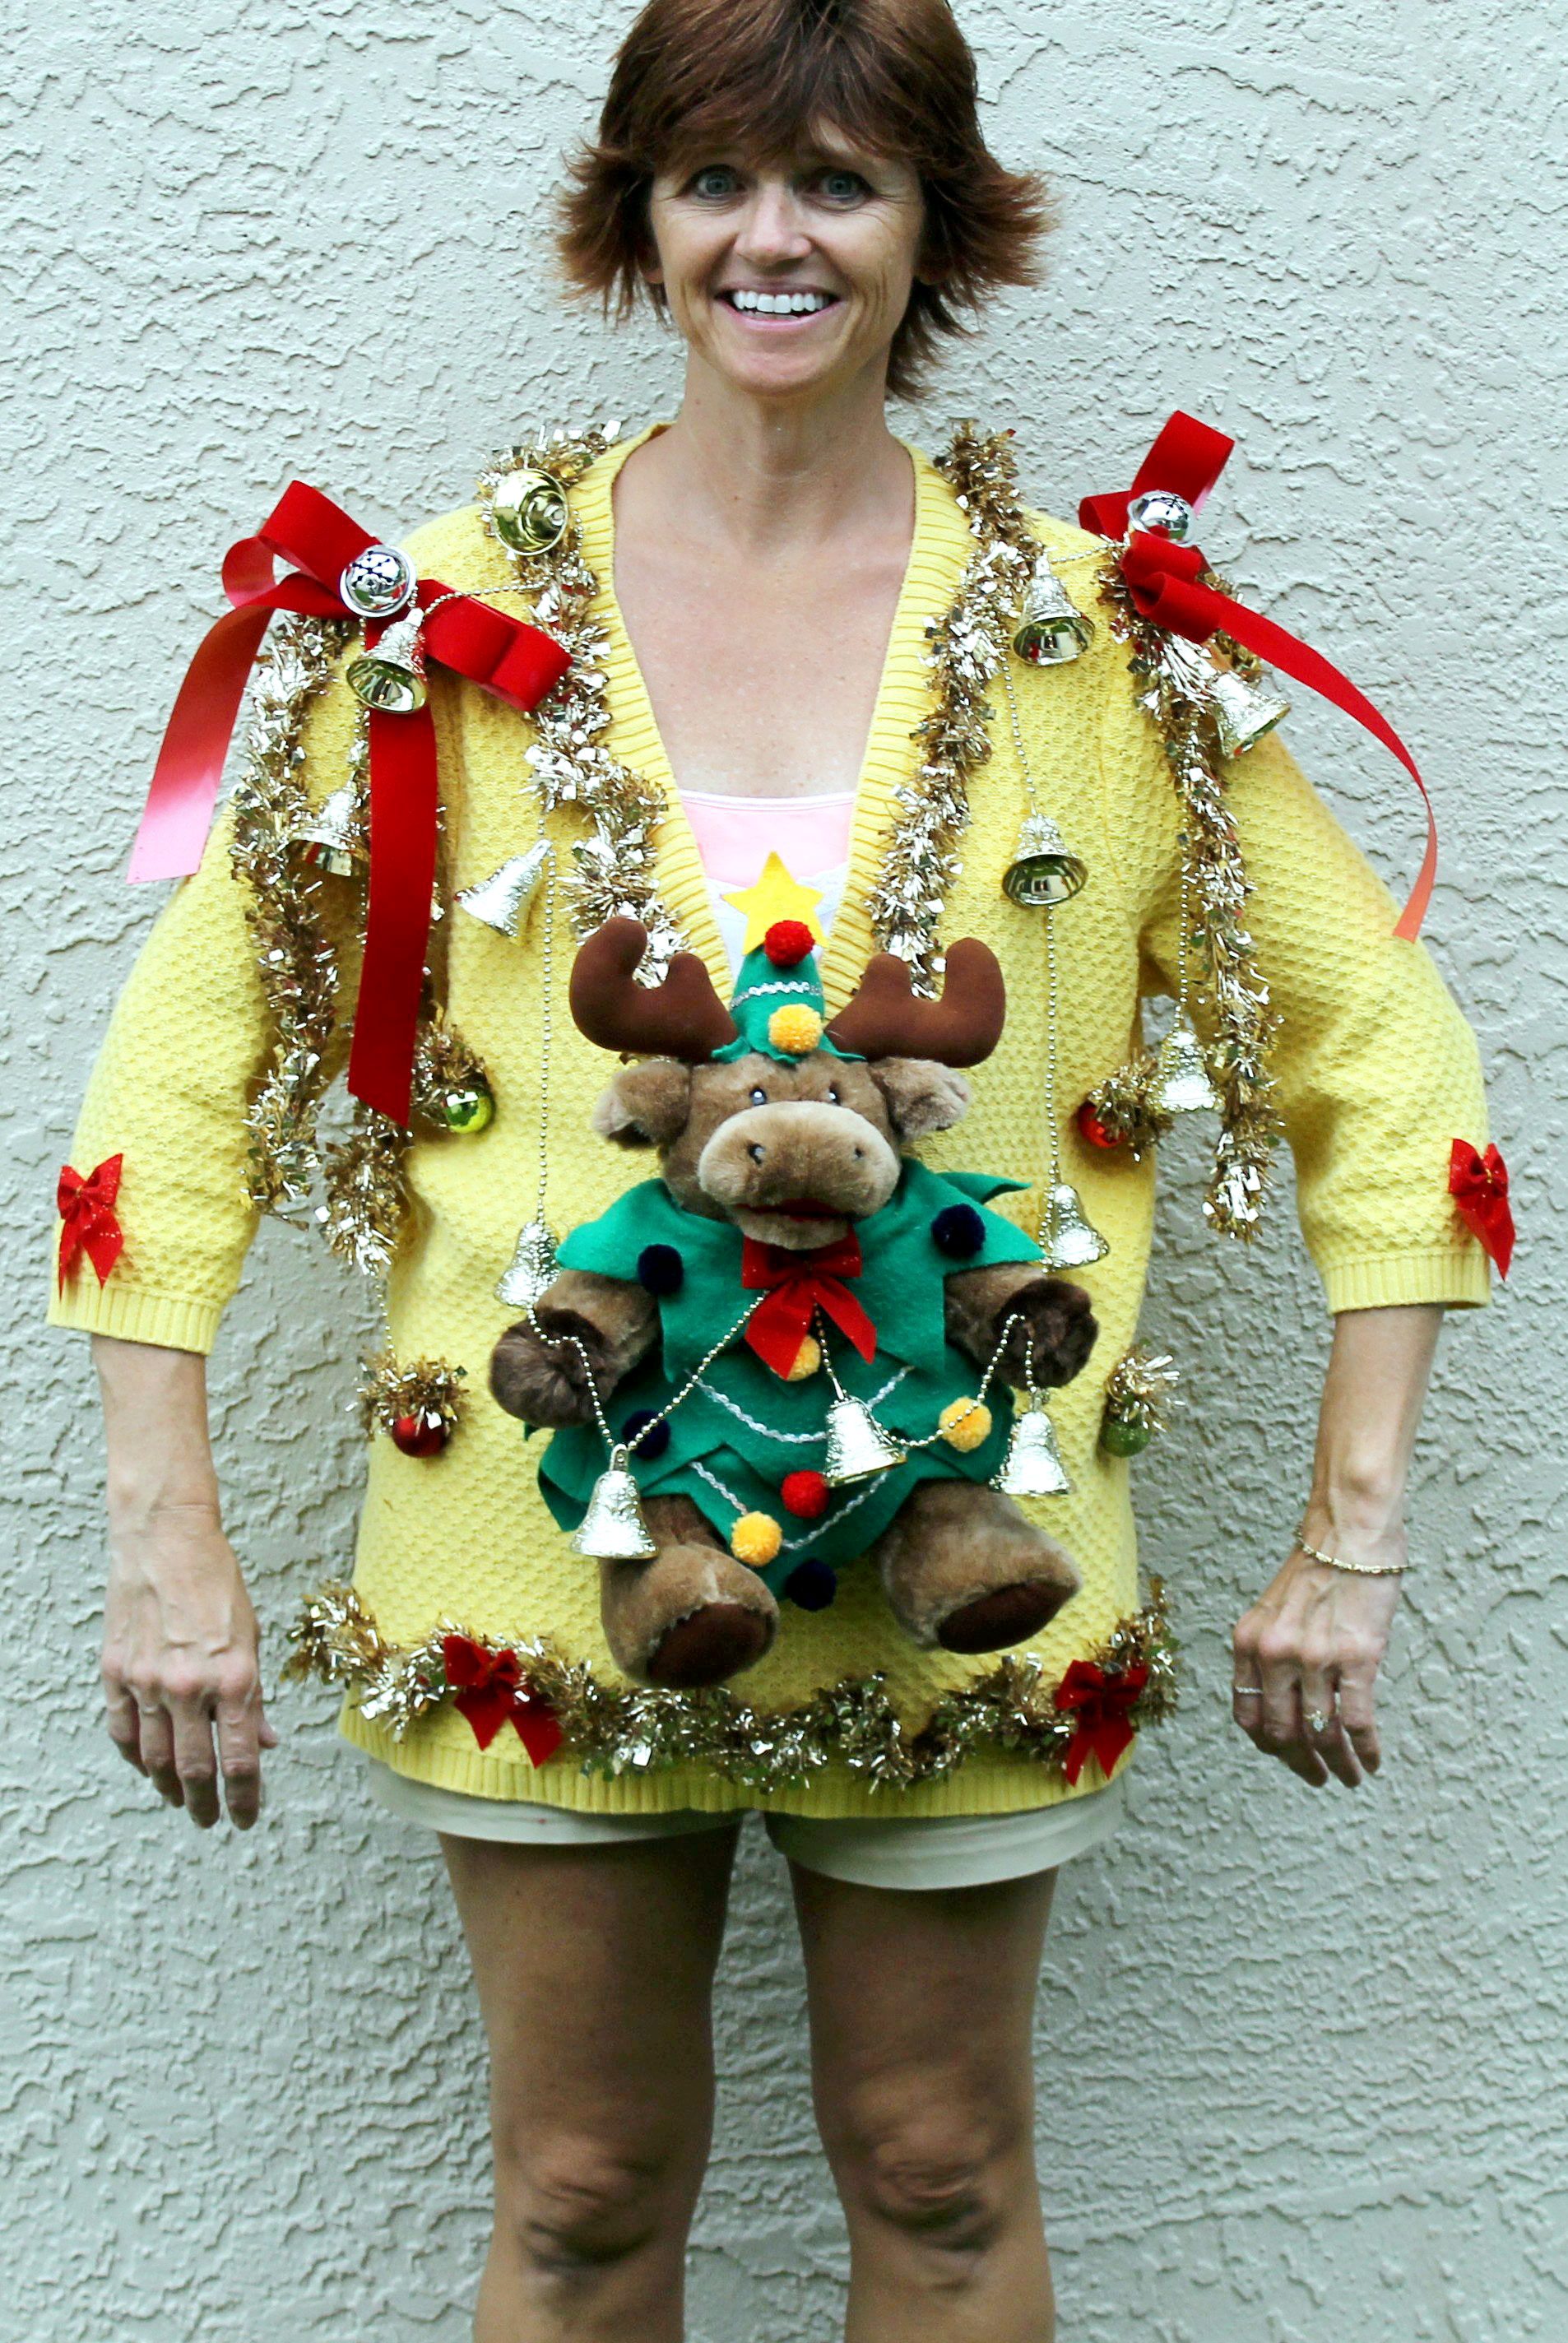 Íme, a világ leggiccsesebb karácsonyi ruhadarabjai - galéria - Blikk